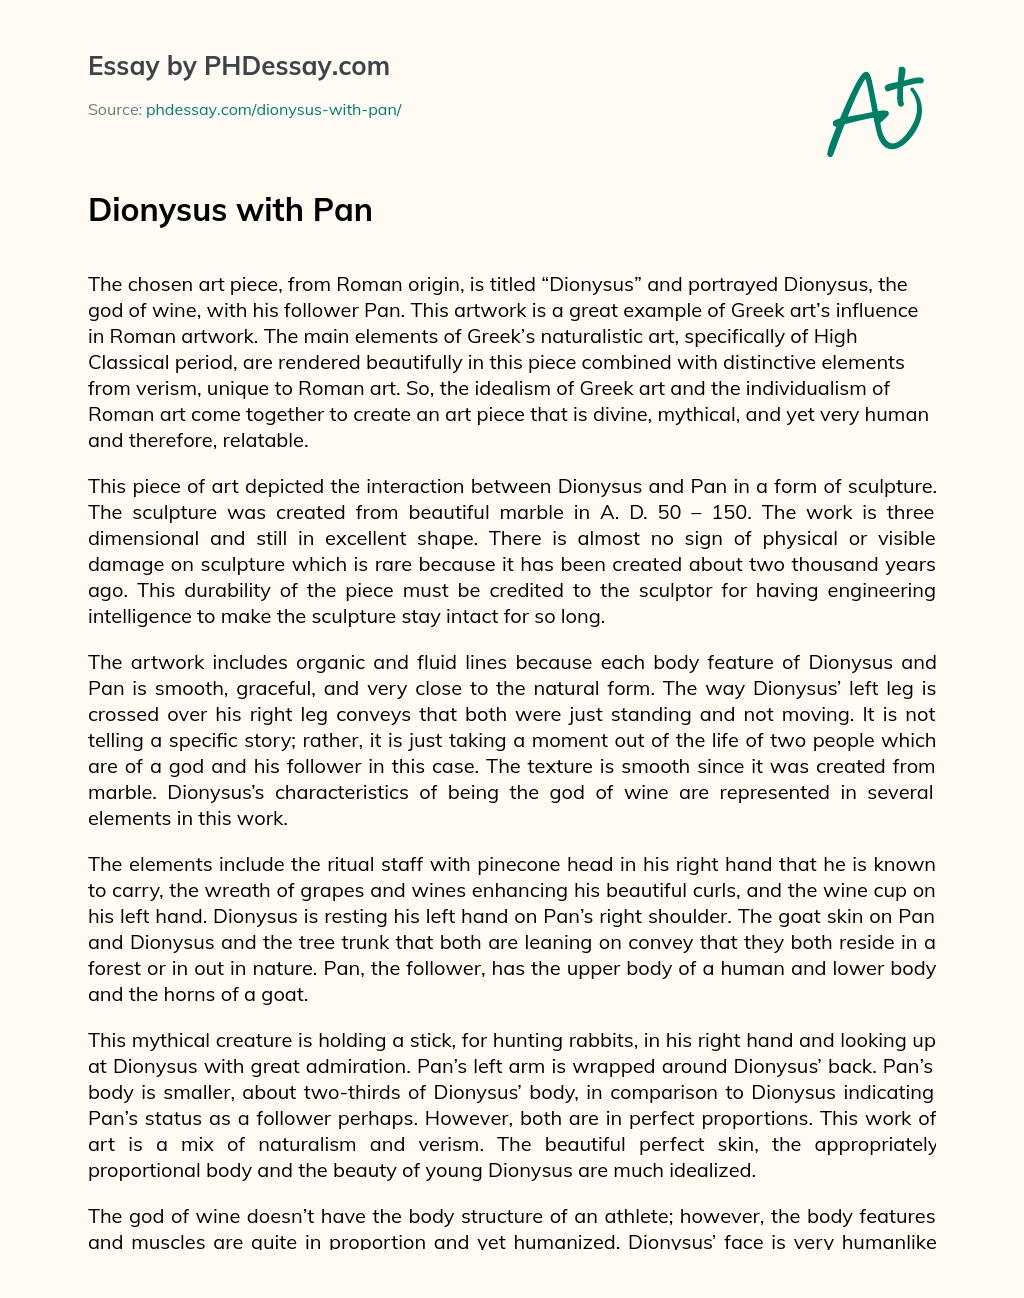 Dionysus with Pan essay